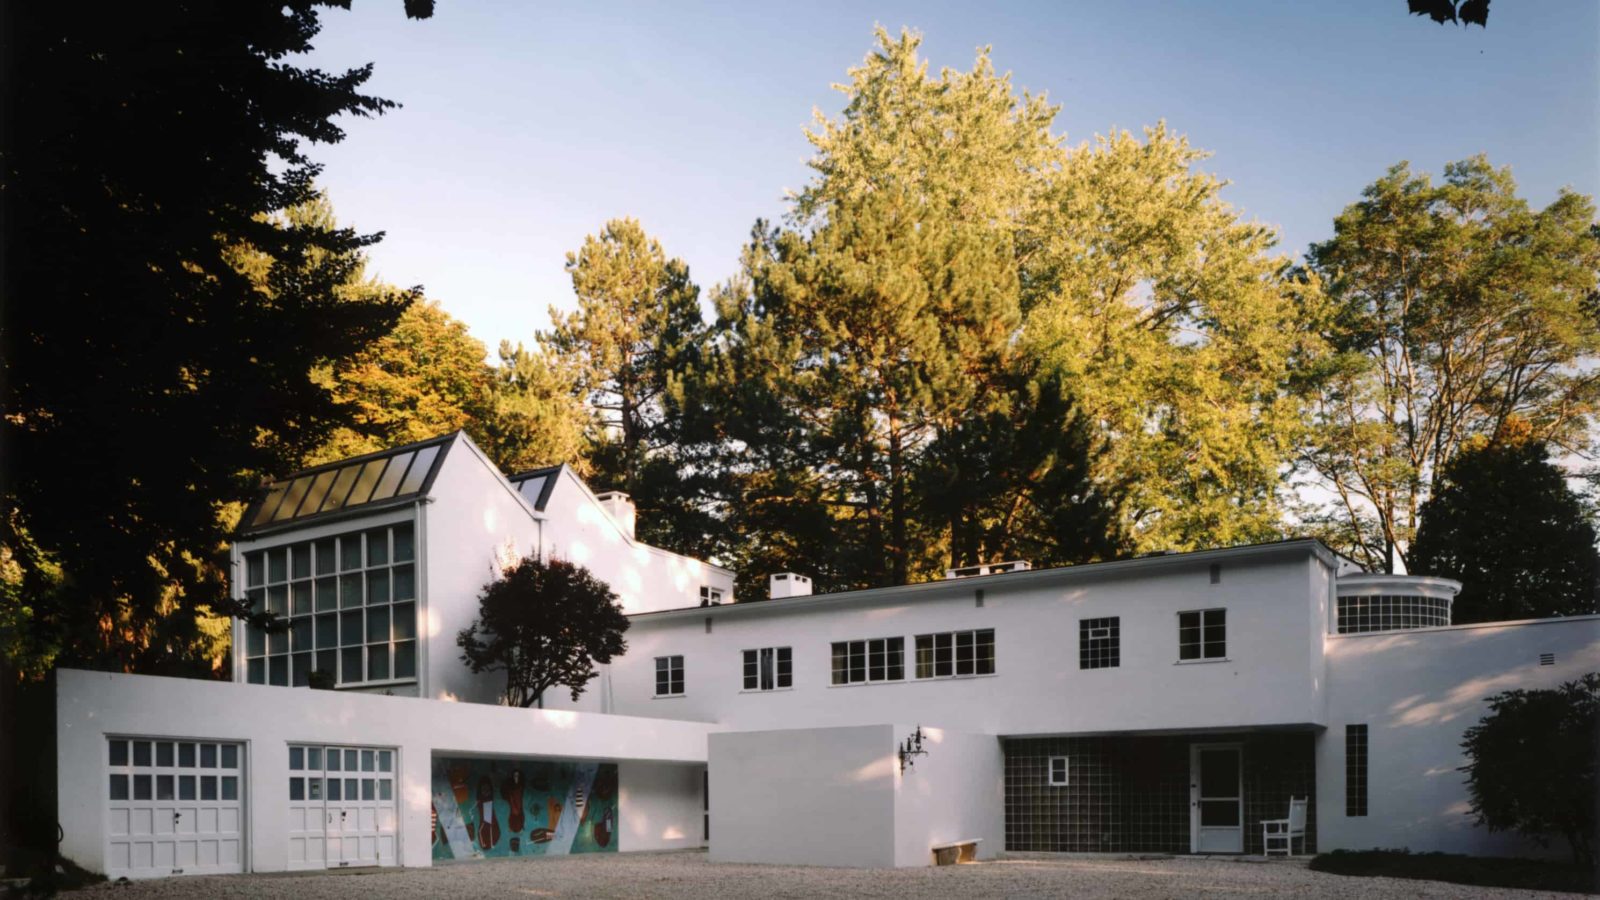 The Frelinghuysen Morris House and Studio in Lenox celebrates Modern art.